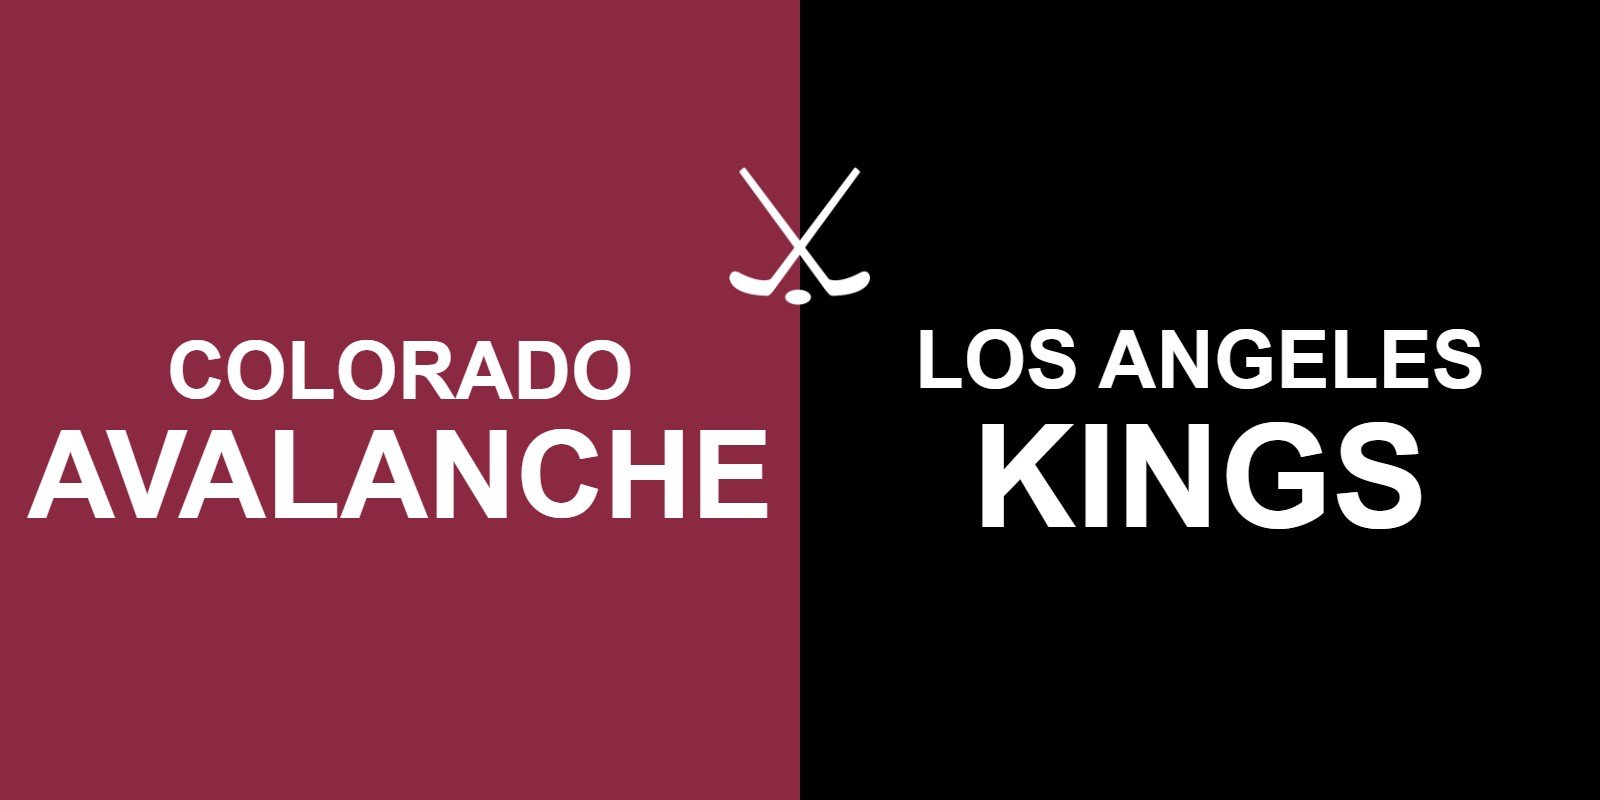 Avalanche vs Kings